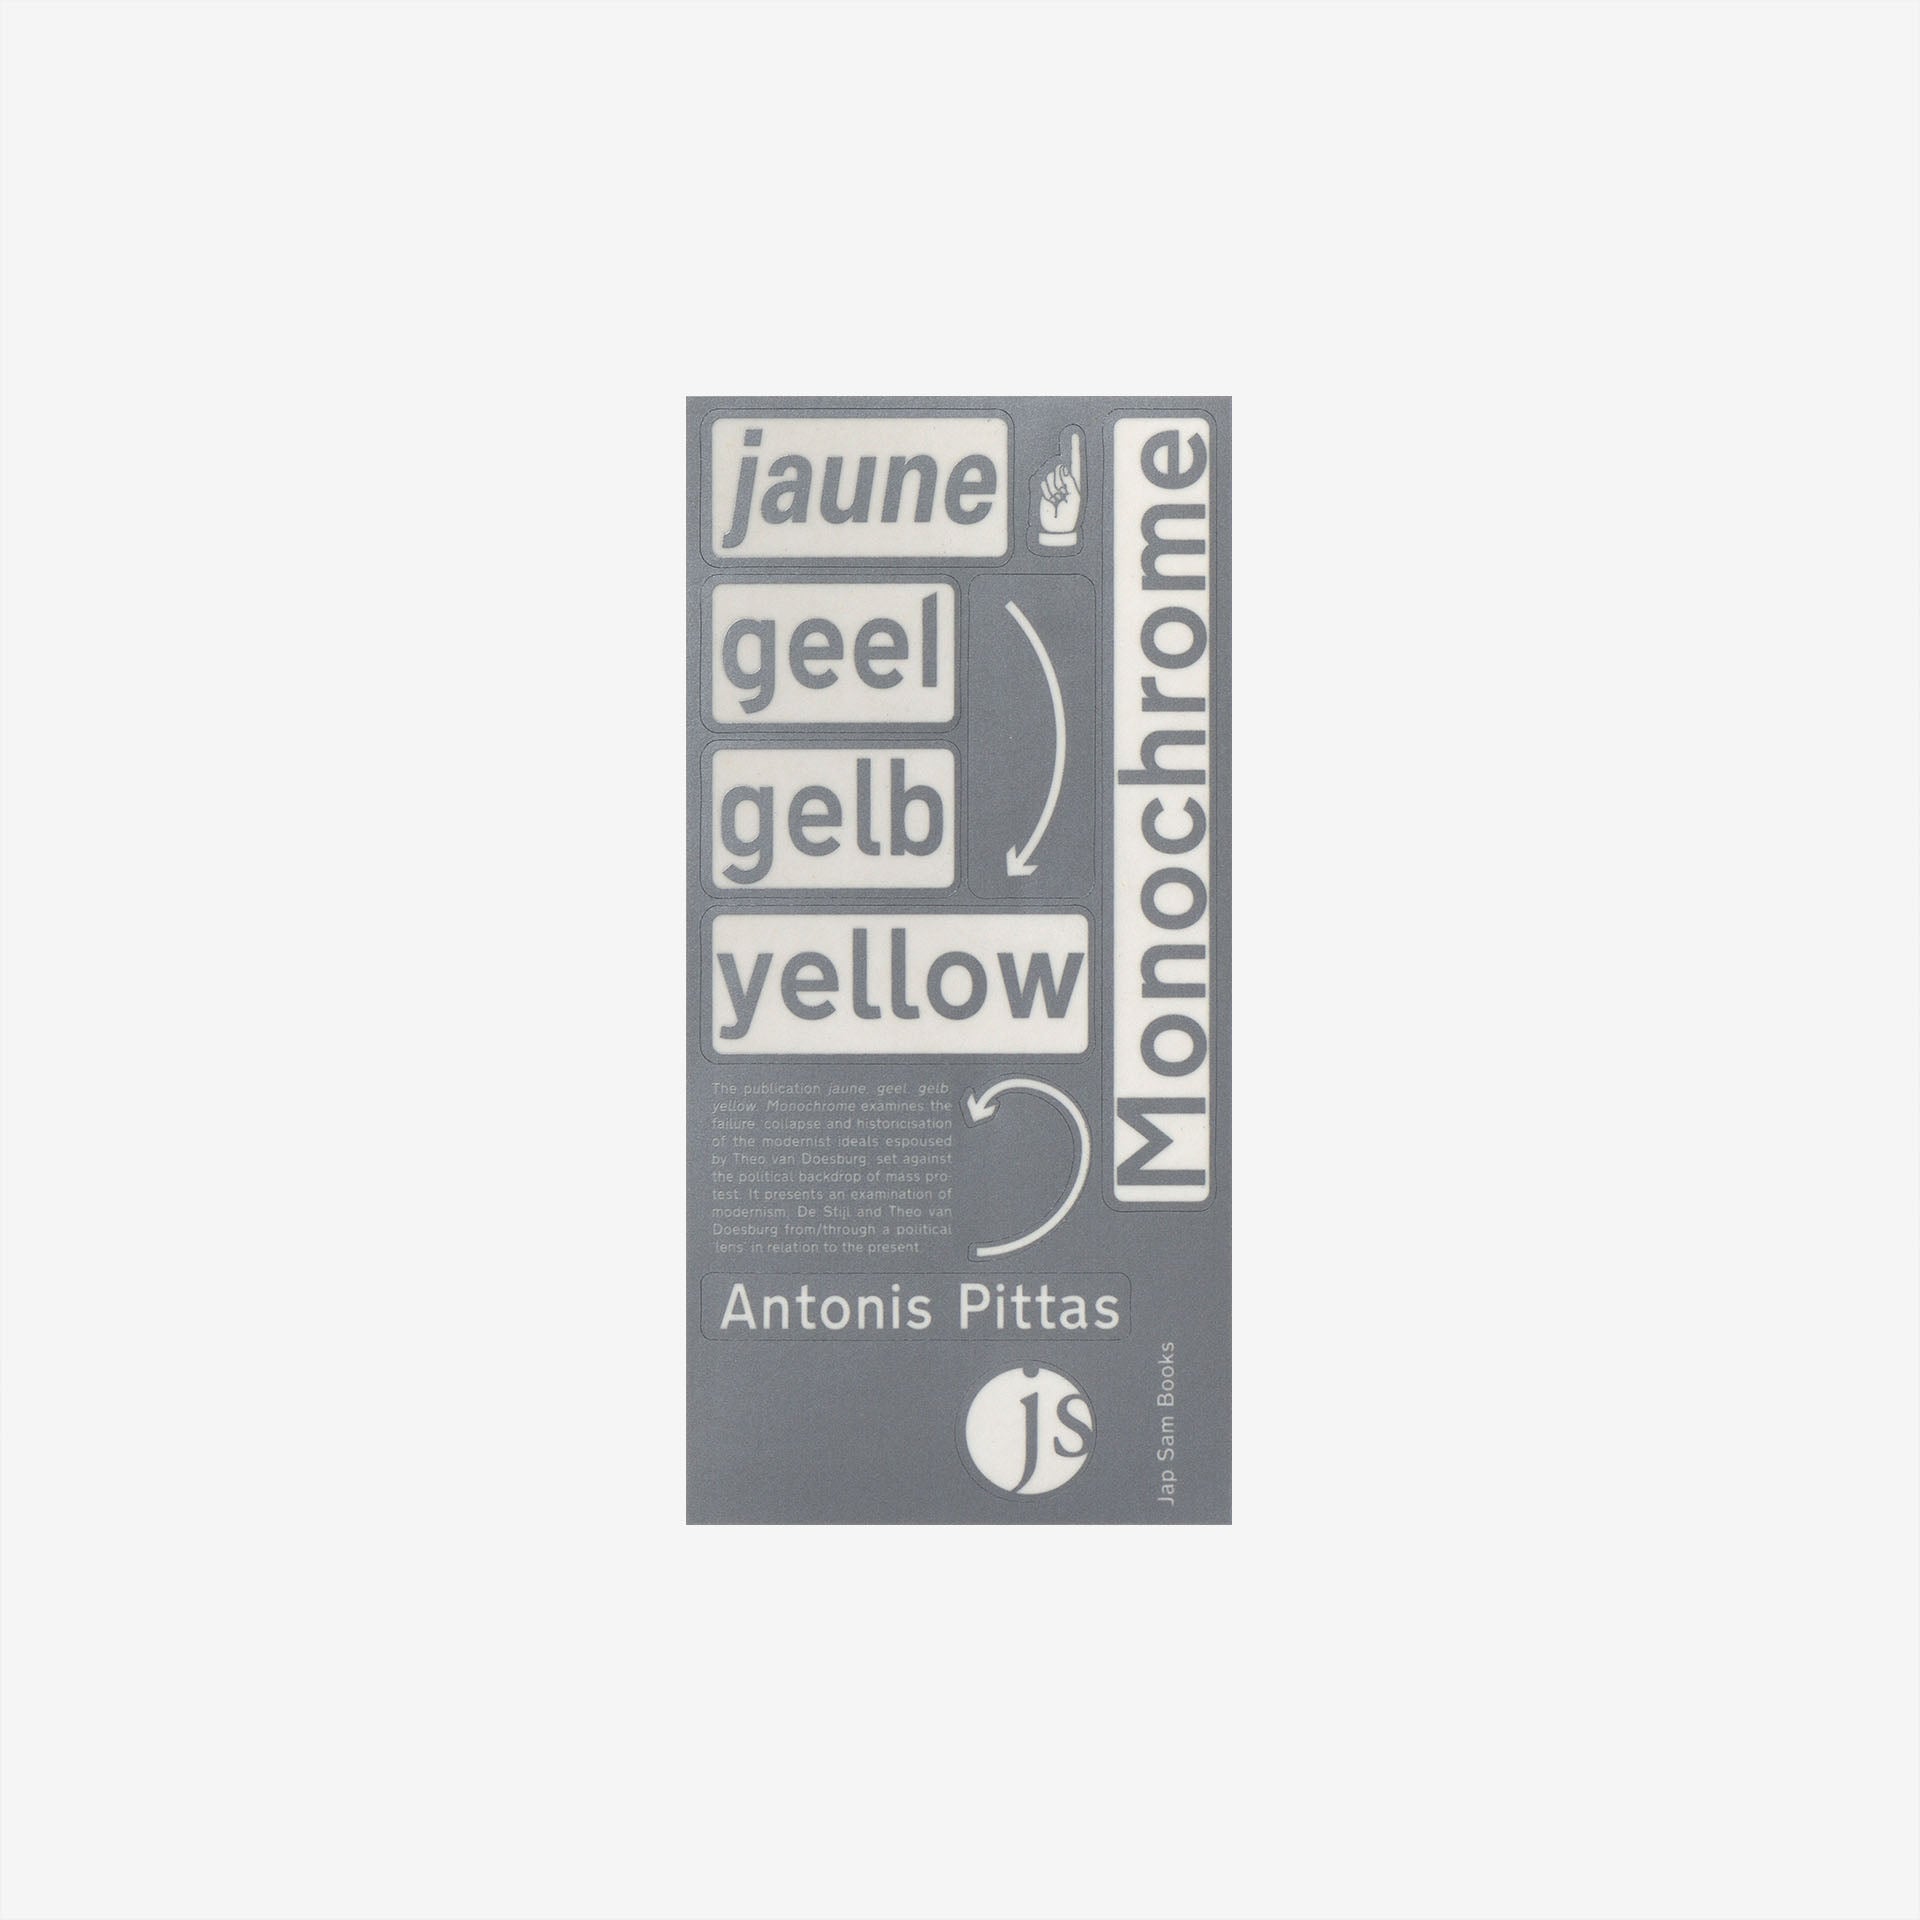 Antonis Pittas: jaune, geel, gelb, yellow. Monochrome